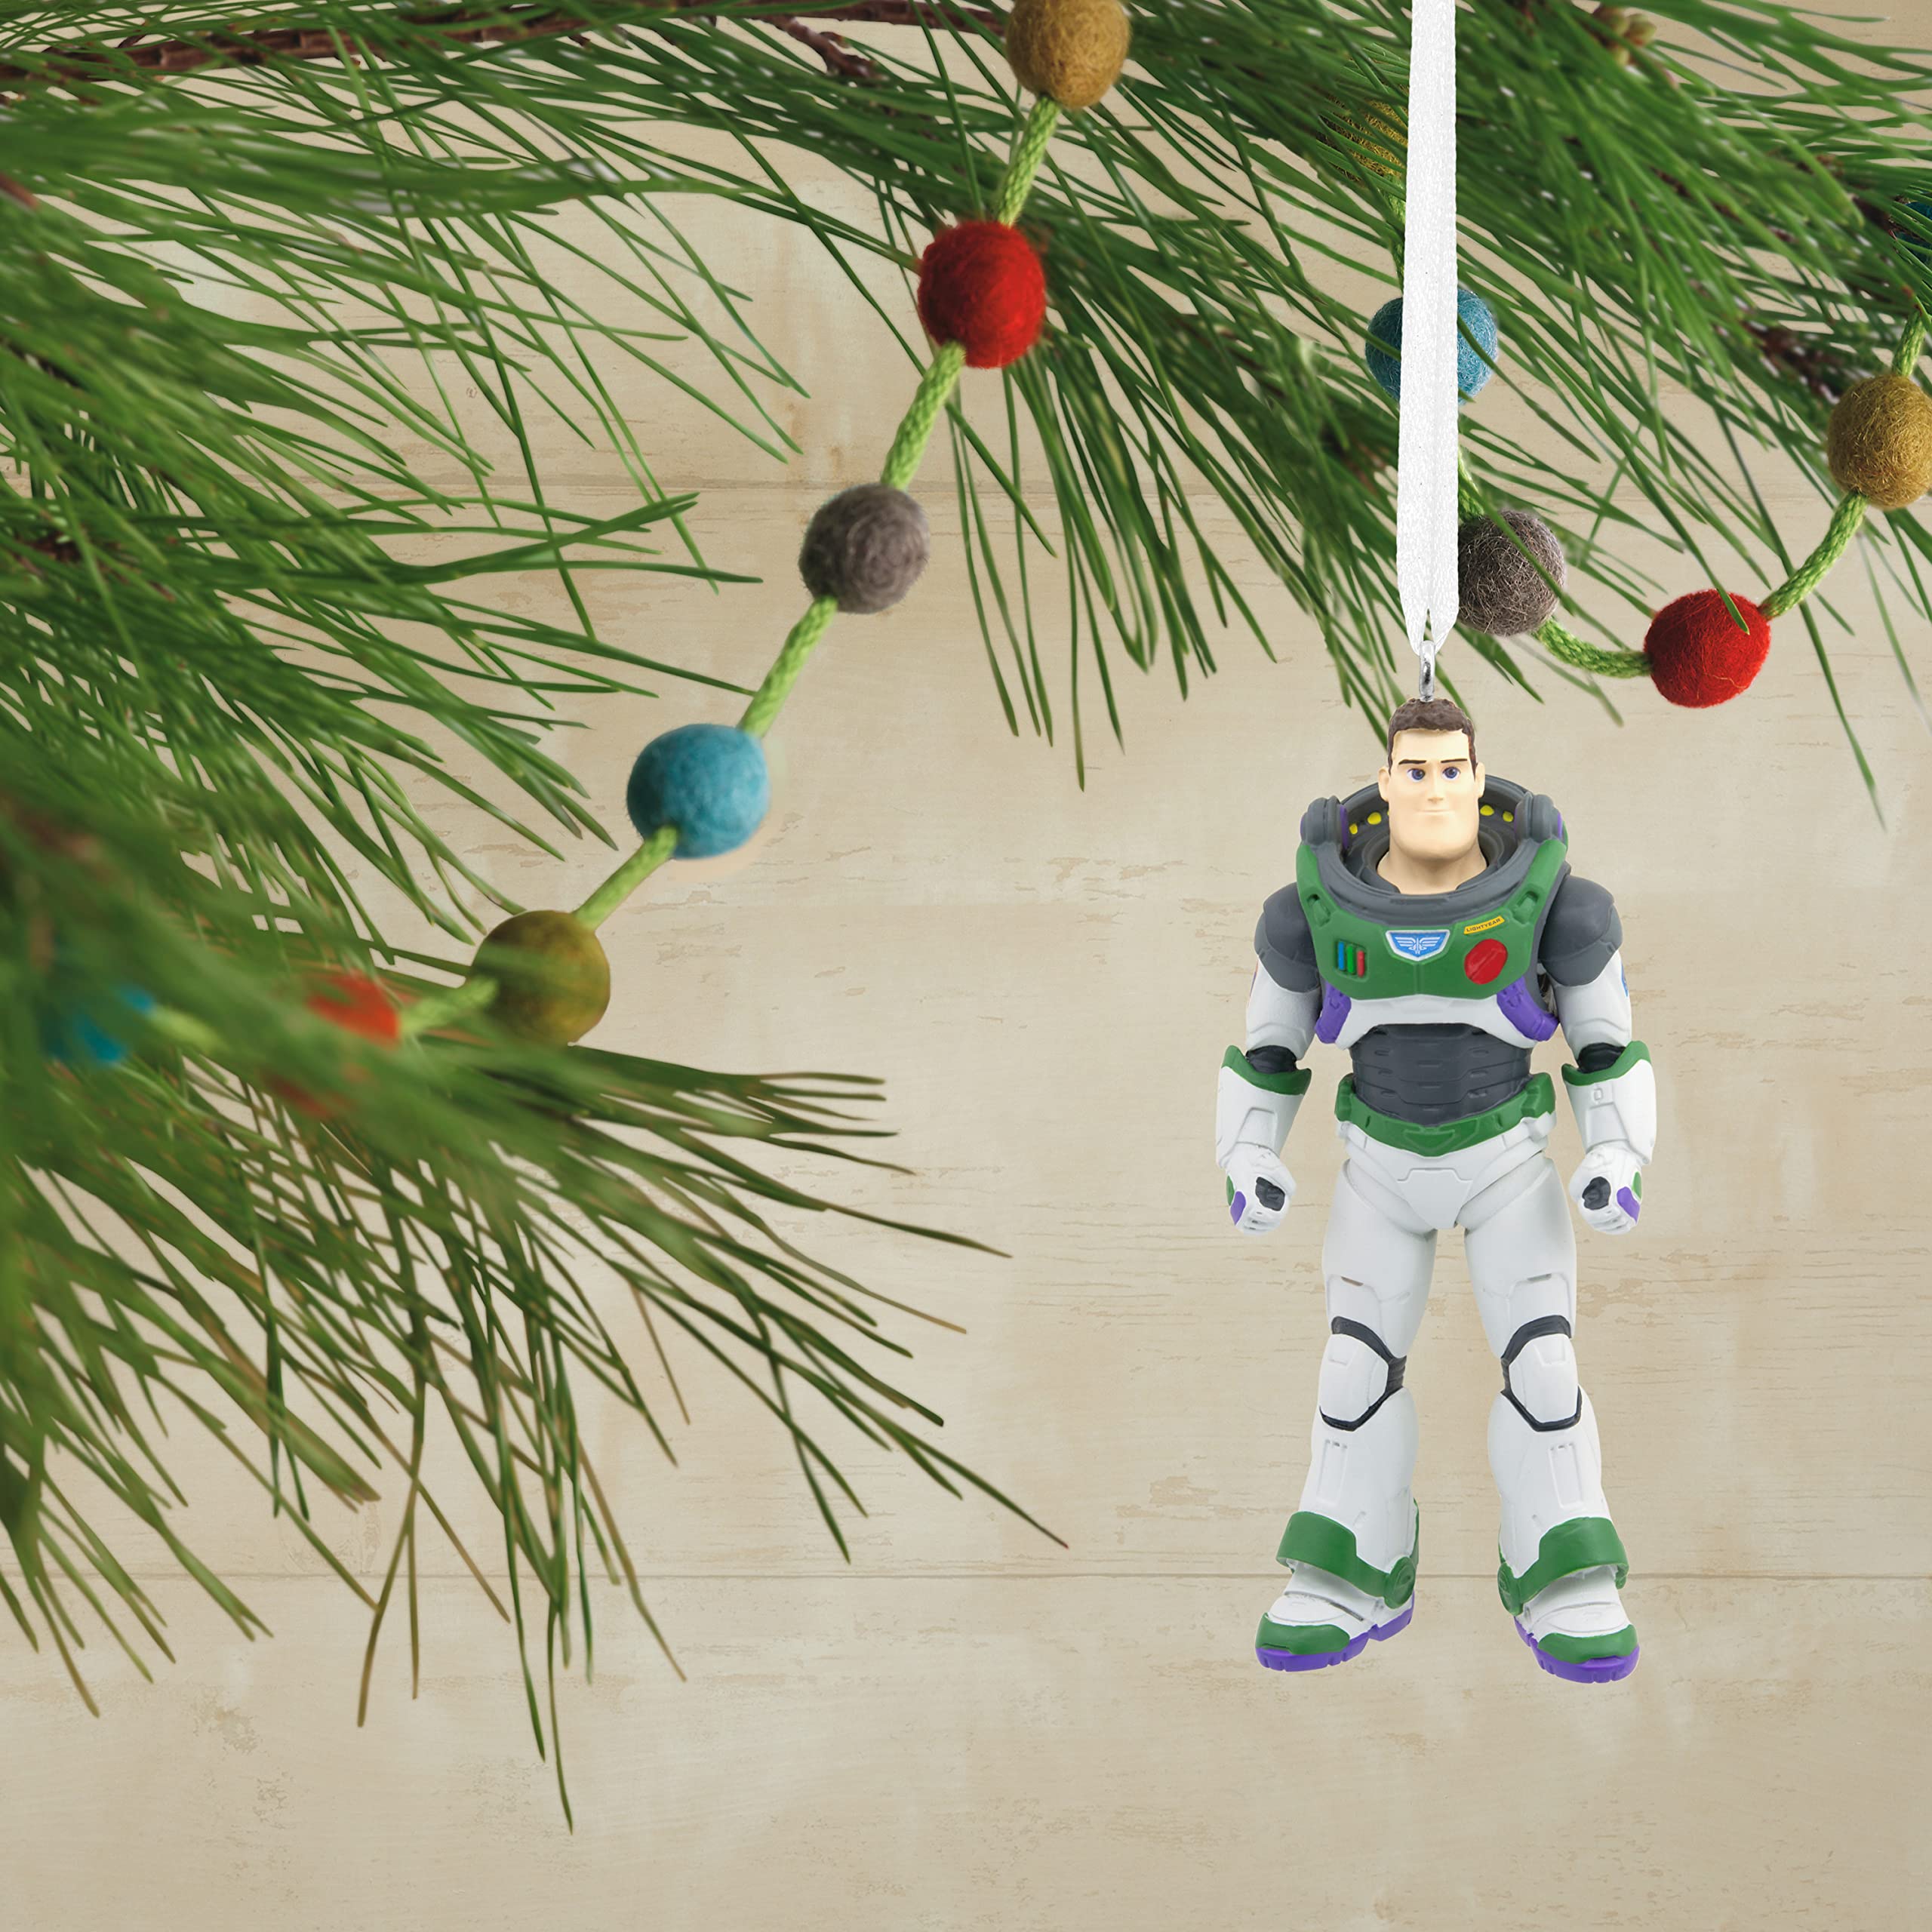 Buzz Lightyear Hallmark Christmas Ornament